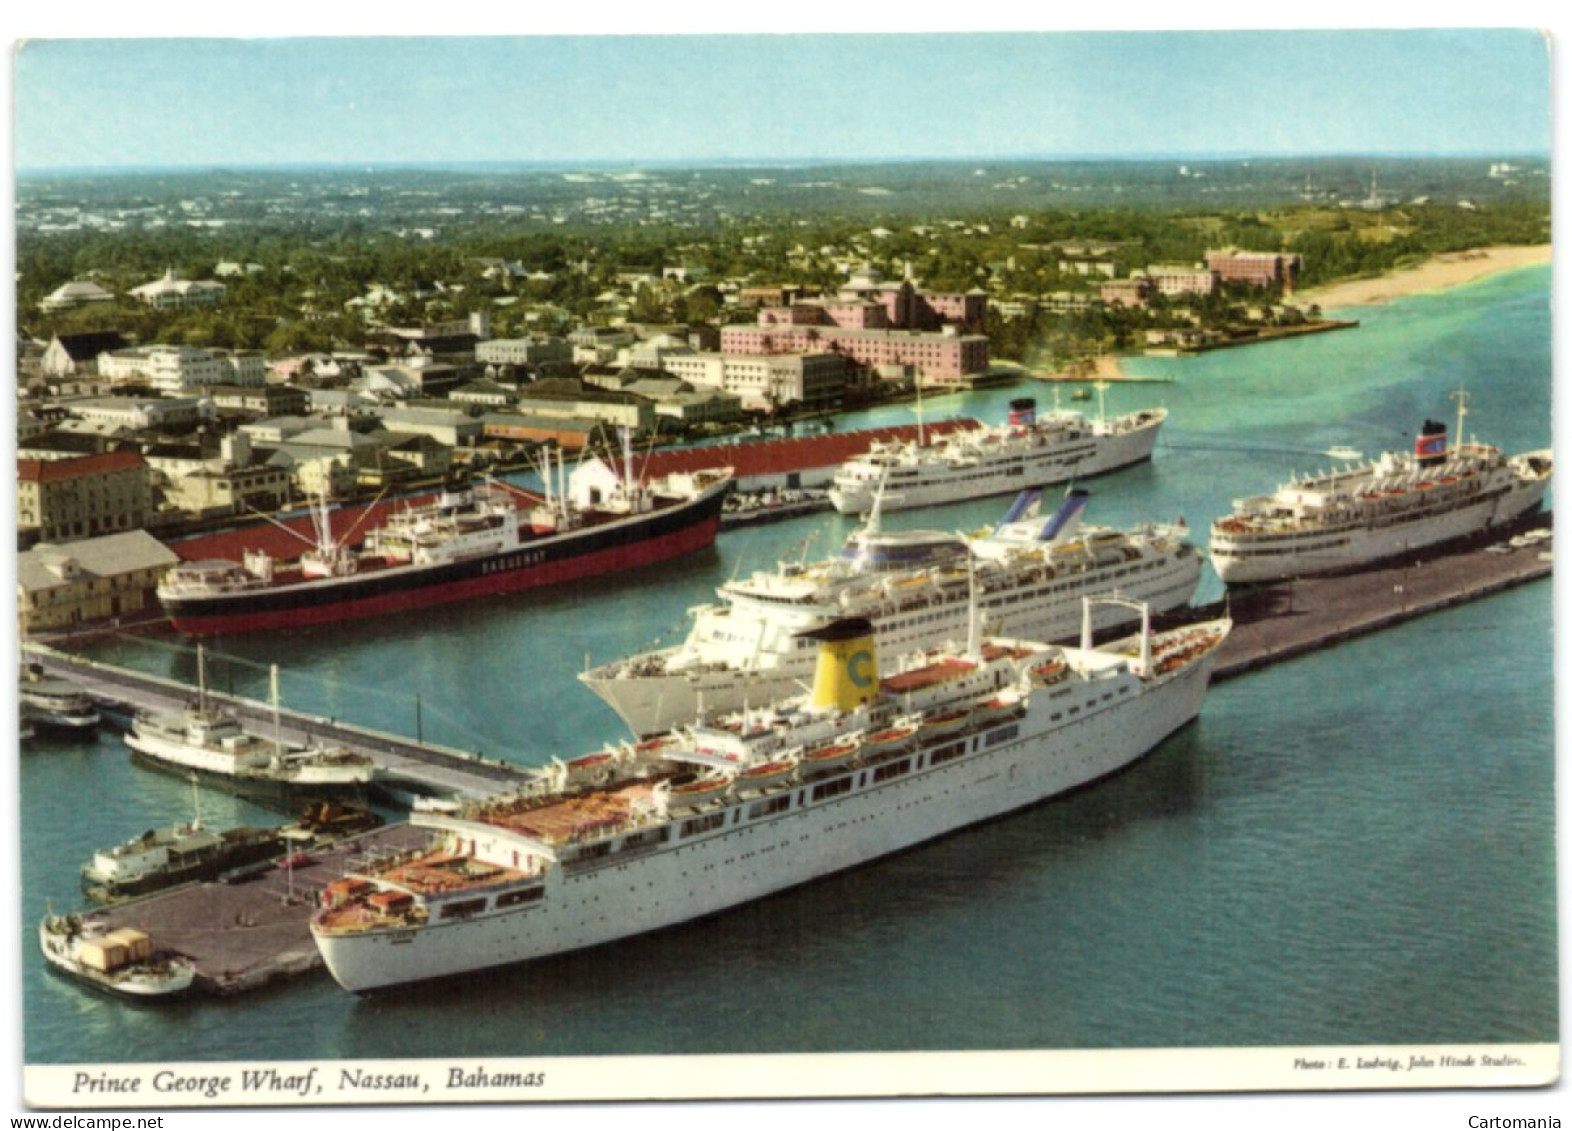 Prince George Wharf - Nassau - Bahamas - Bahamas